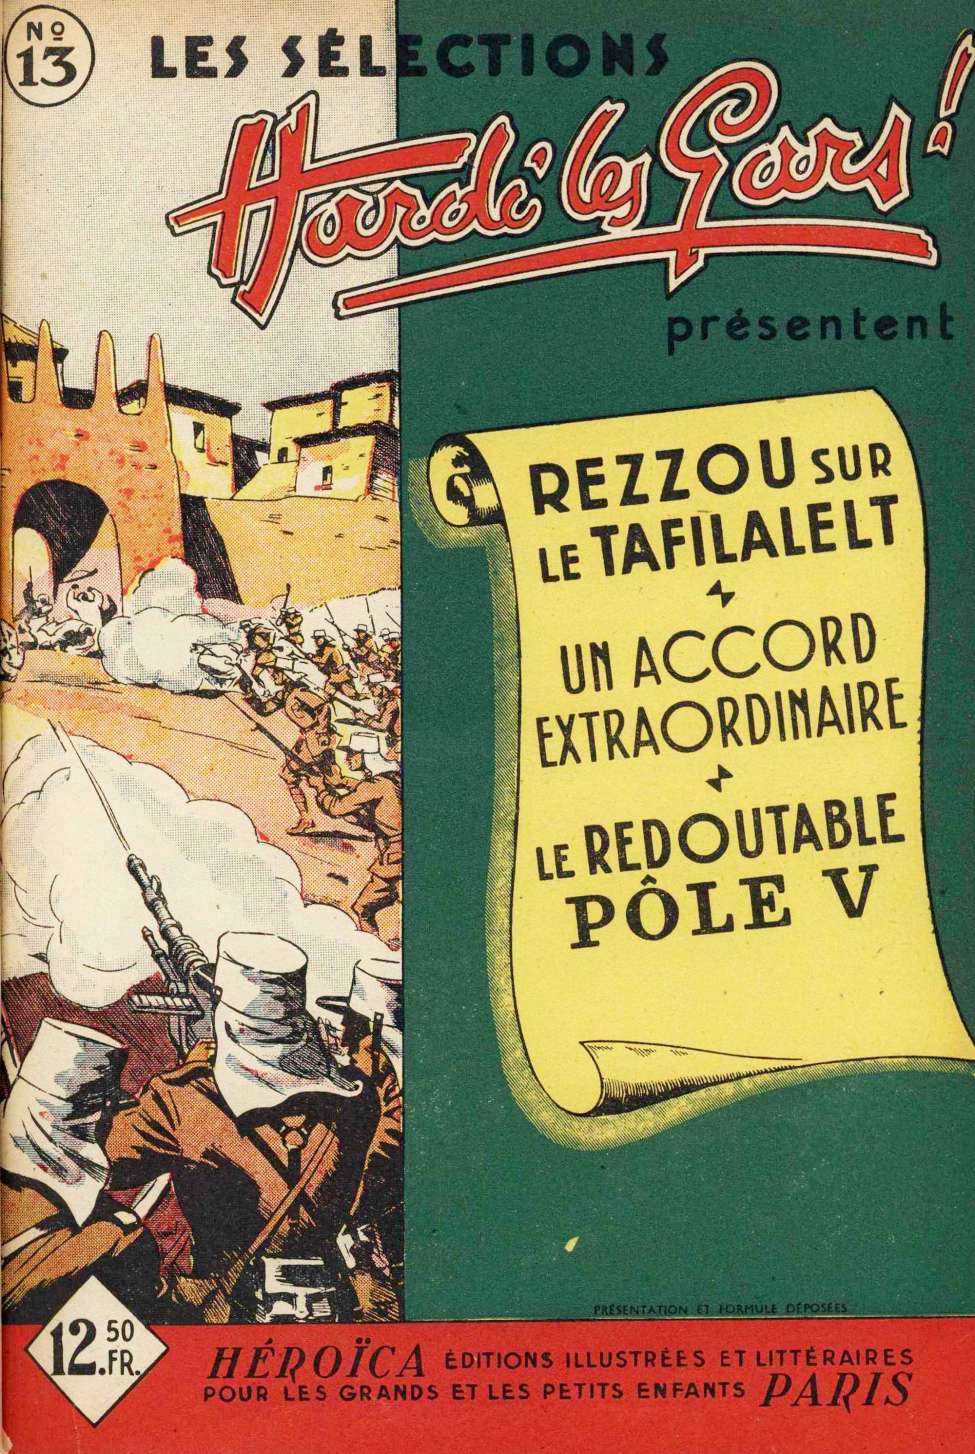 Comic Book Cover For Hardi les Gars 13 - Rezzou sur le Tafilalelt